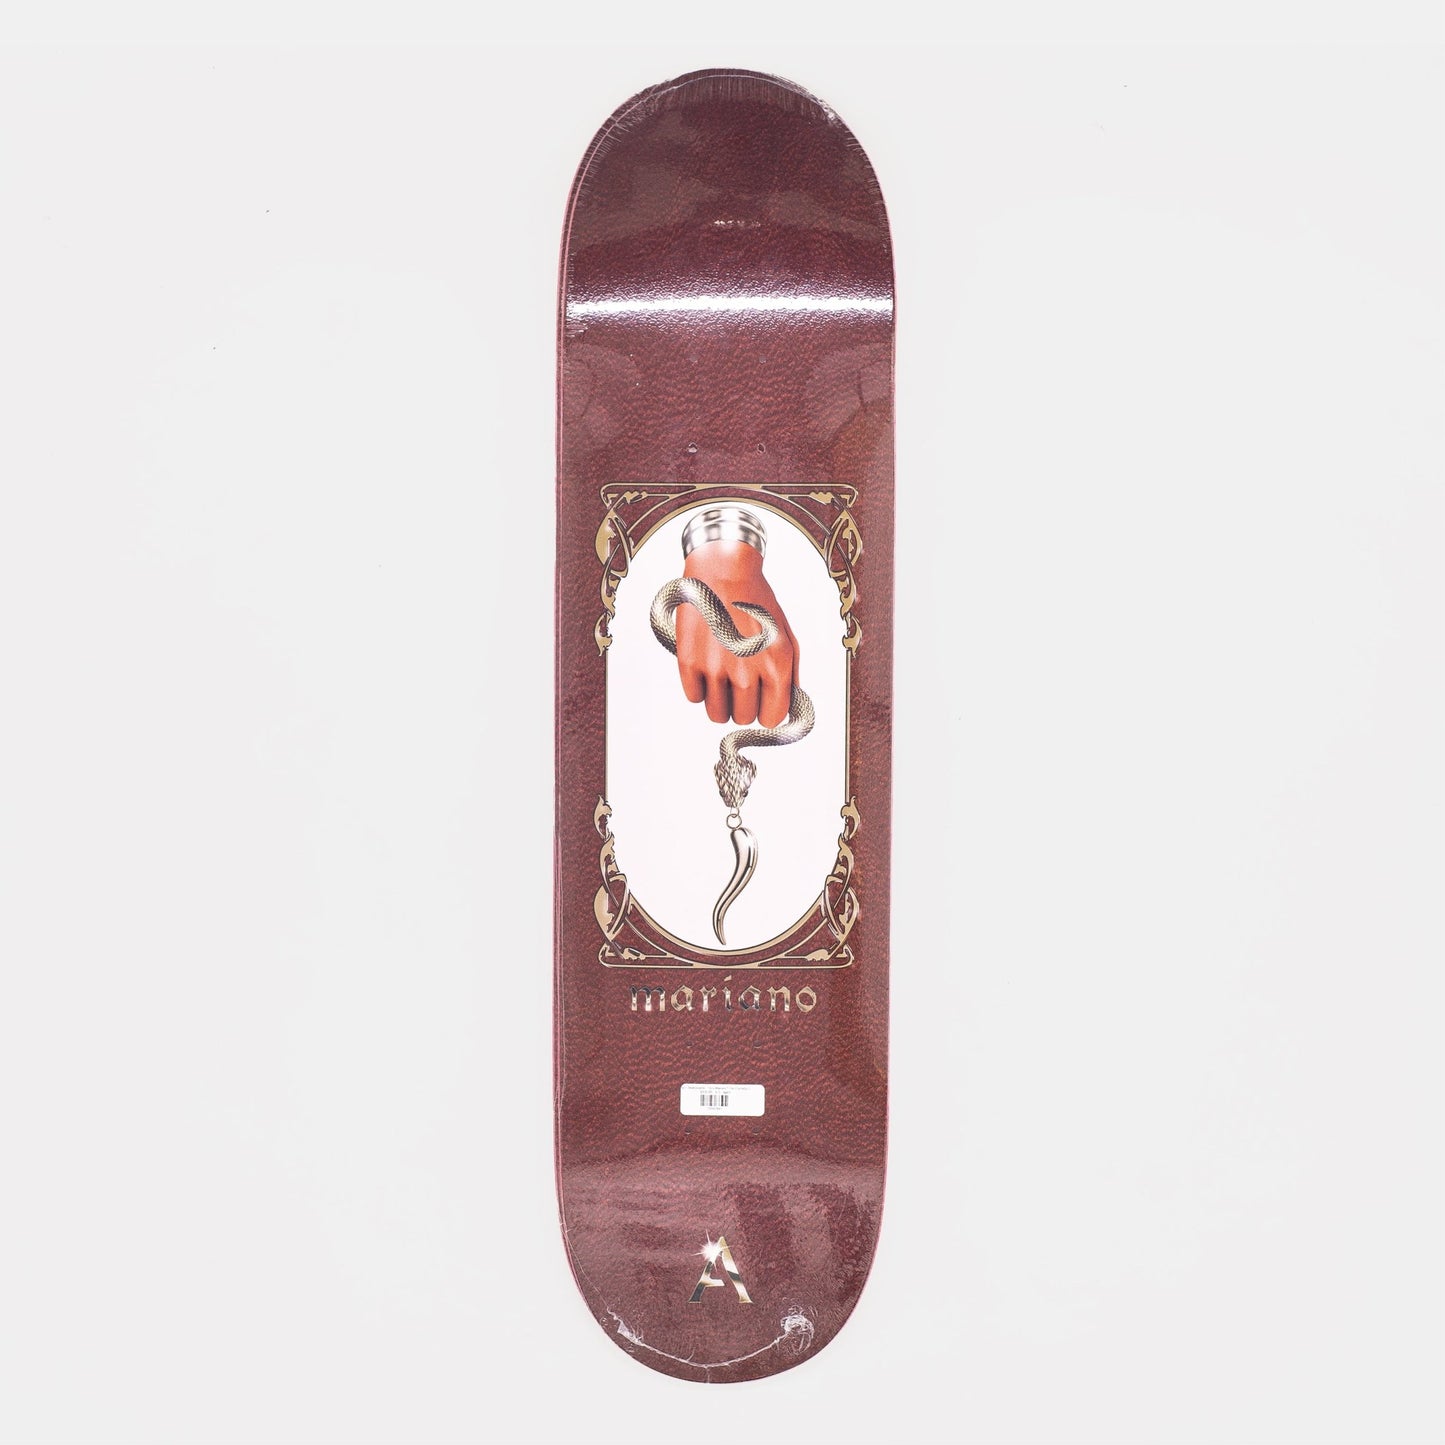 April Skateboards - "Guy Mariano" The Cornetto 2 - Parliamentskateshop